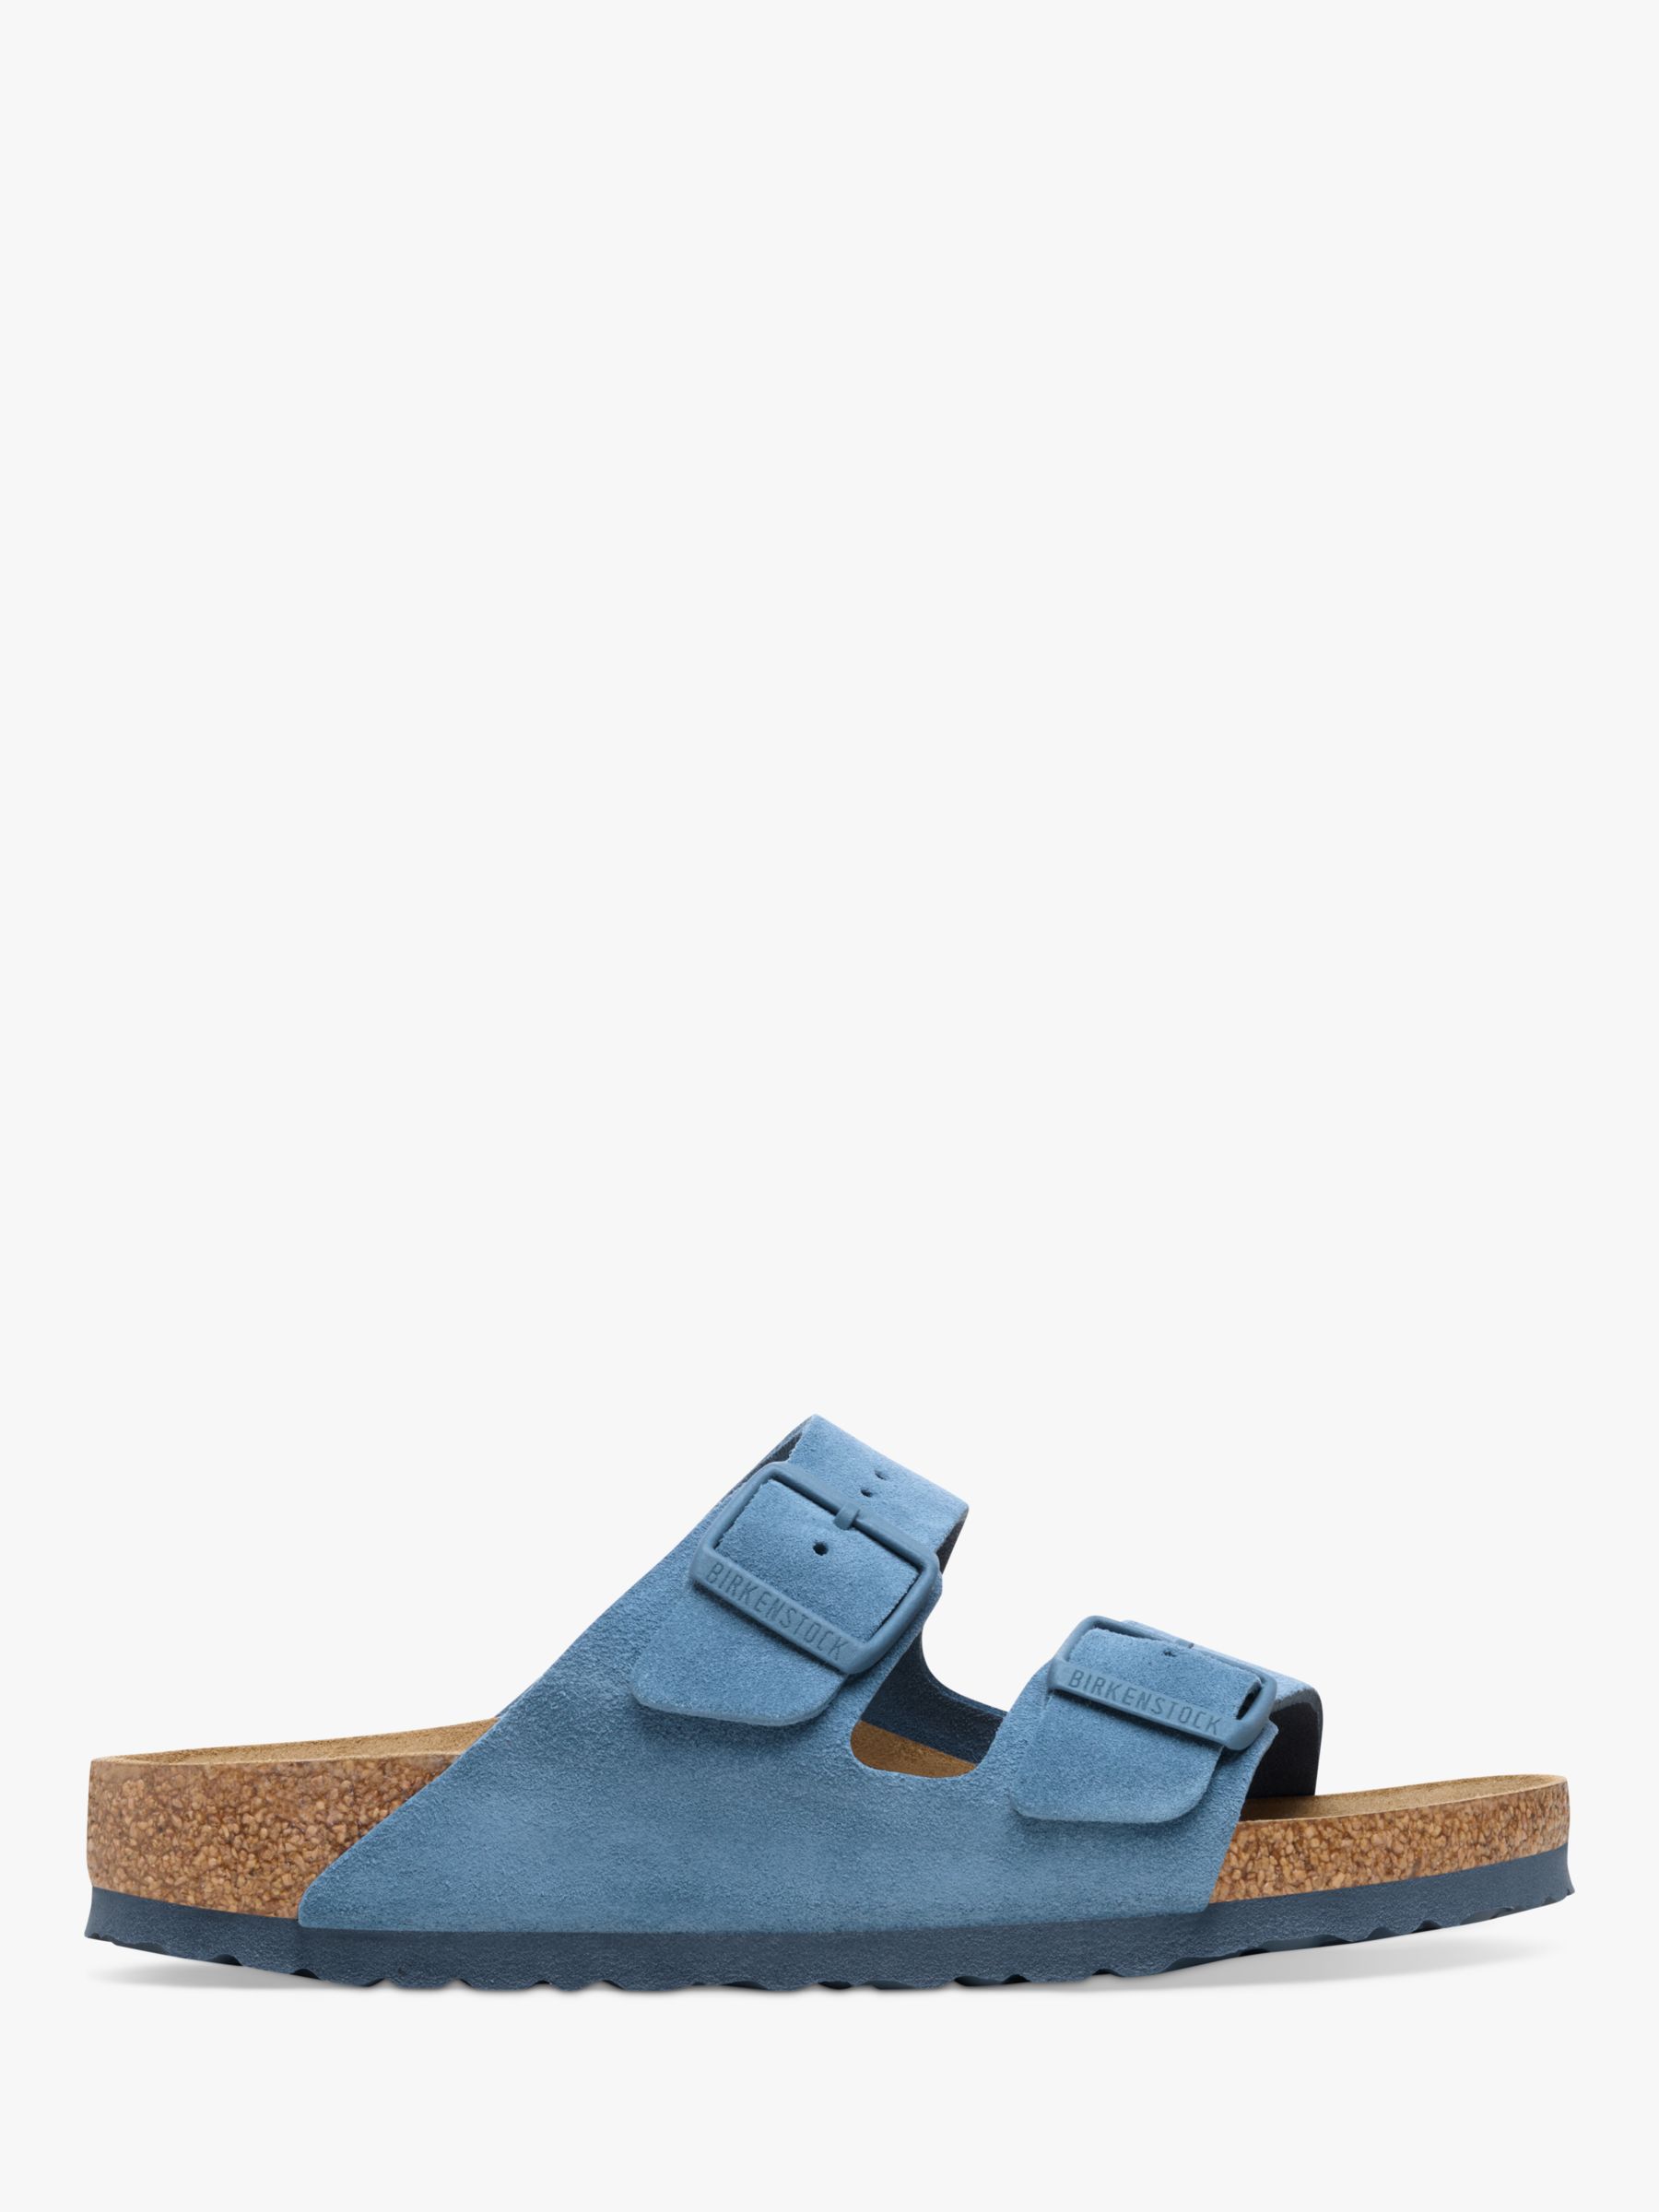 Birkenstock Arizona Suede Sandals, Elemental Blue, 40